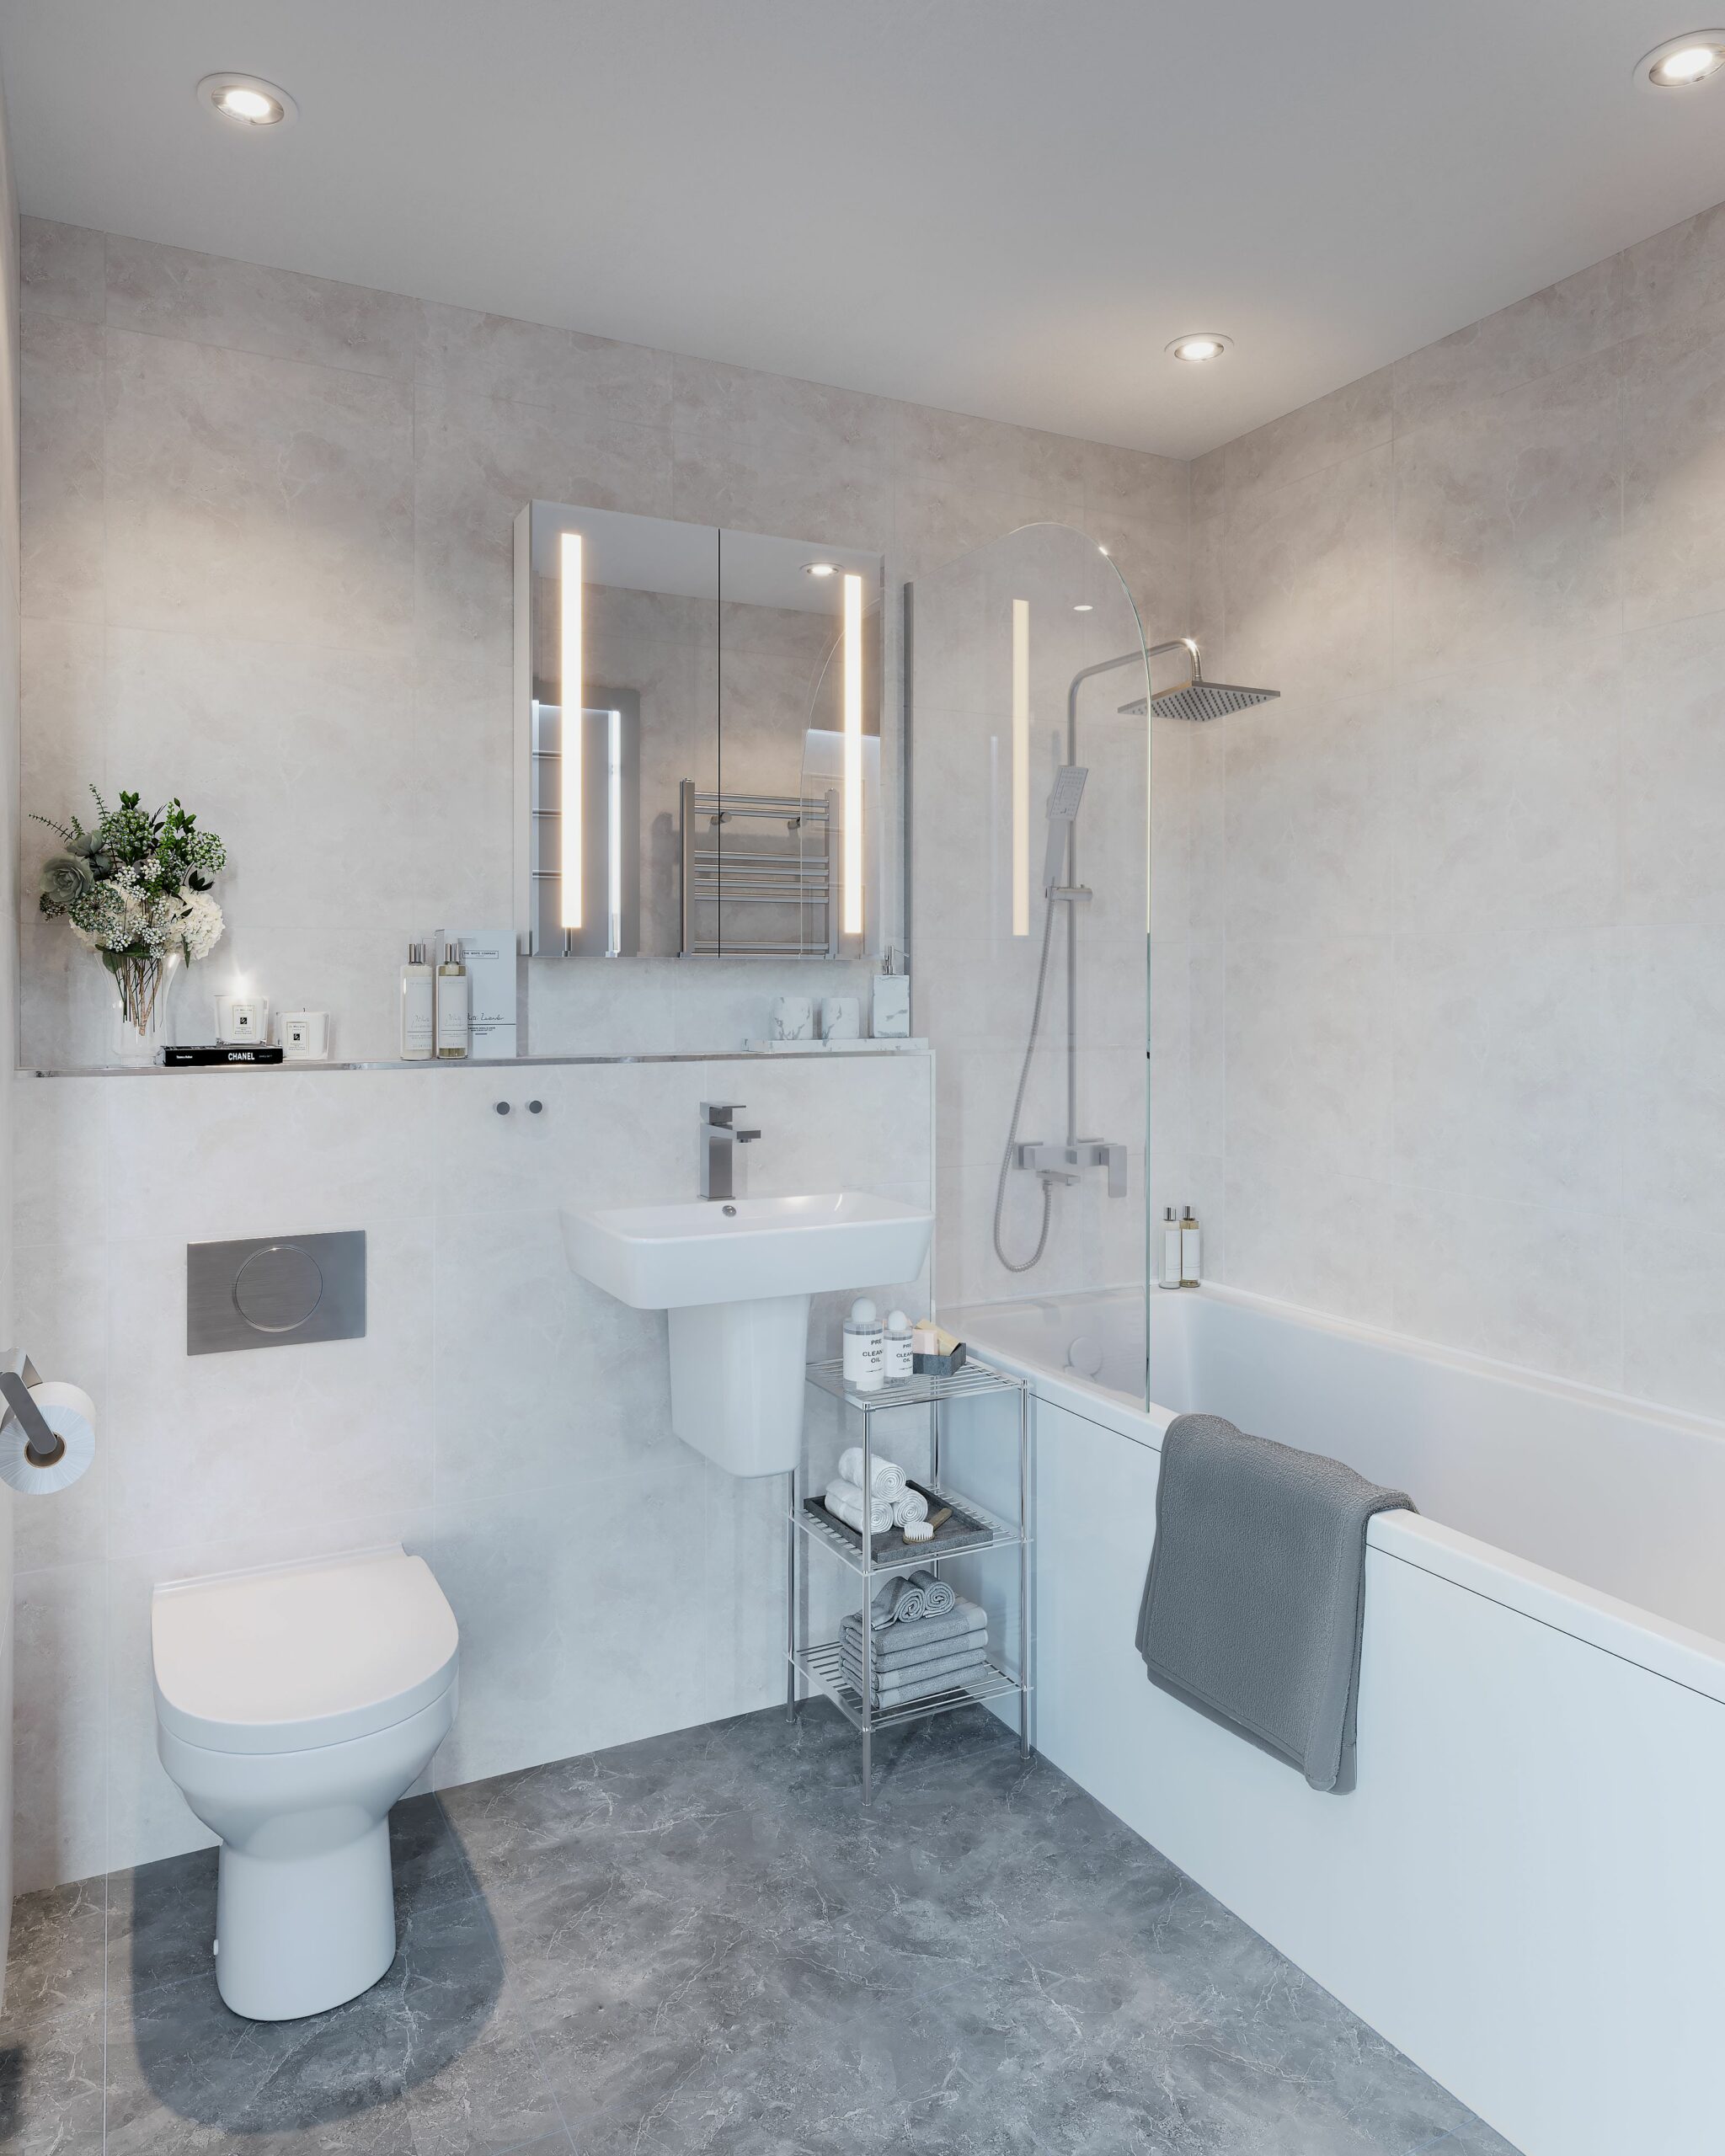 interior bathroom cgi 3d visualisation visual artist cheltenham london market property development apartment